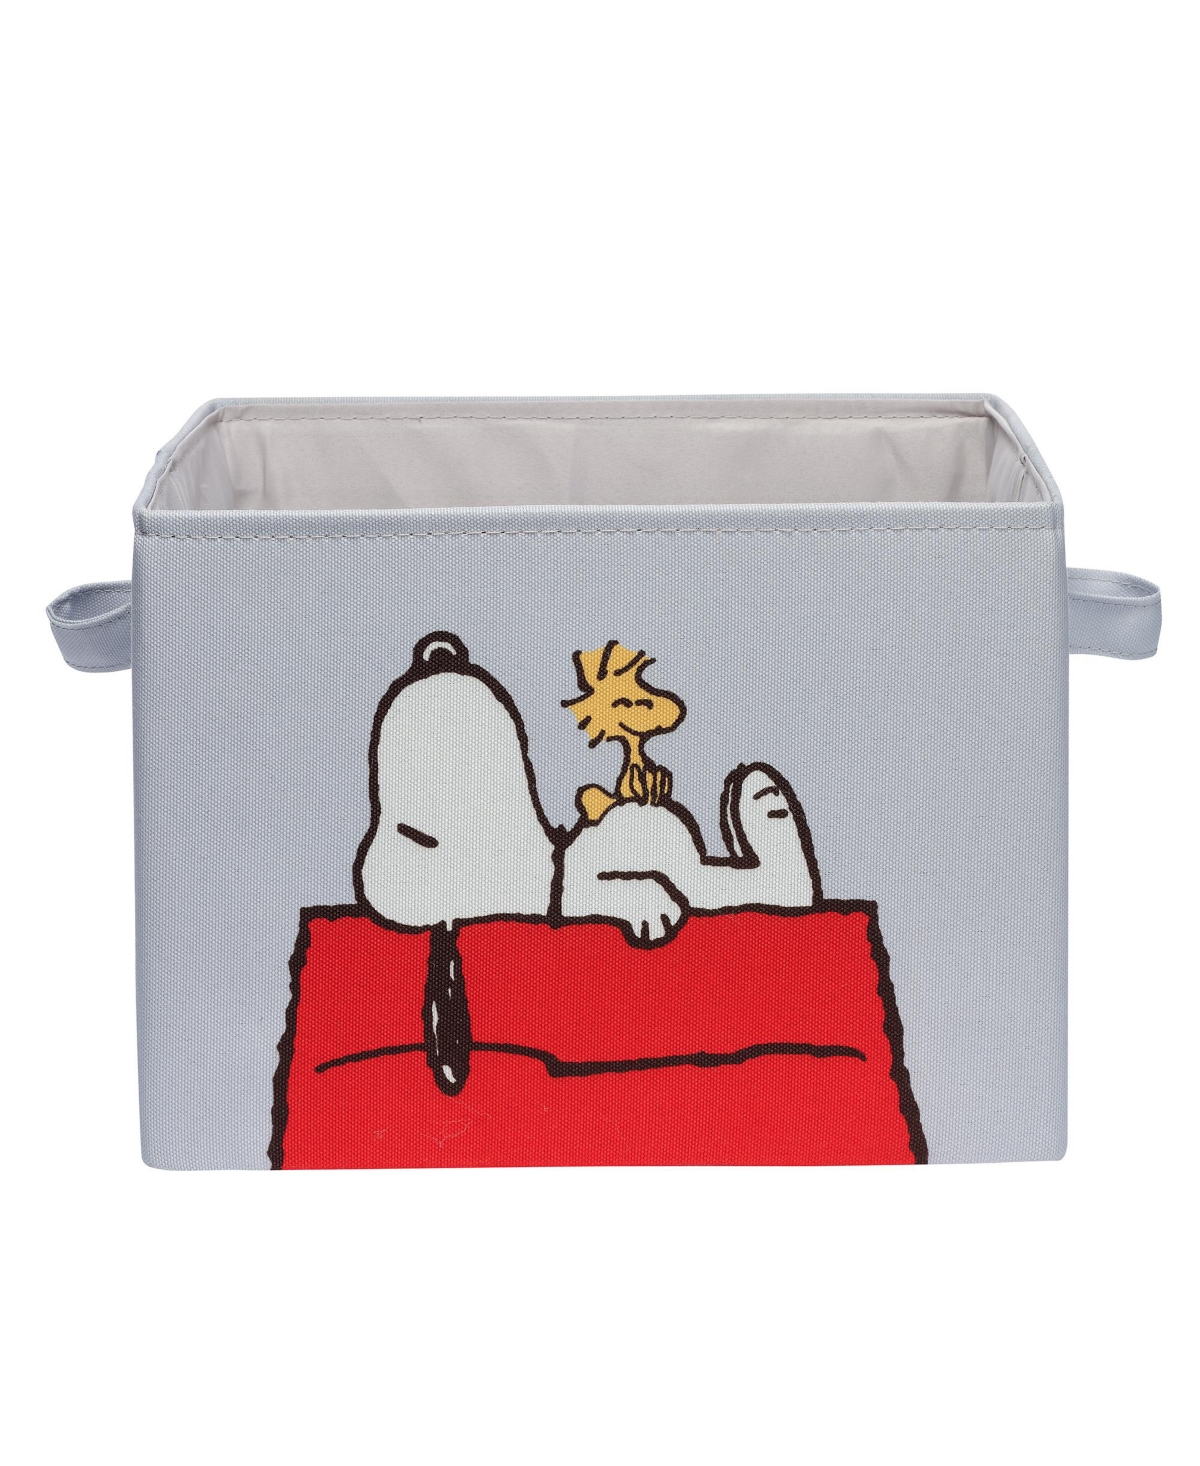 Snoopy Foldable/Collapsible Storage Bin/Basket Organizer w/ Handles - Gray